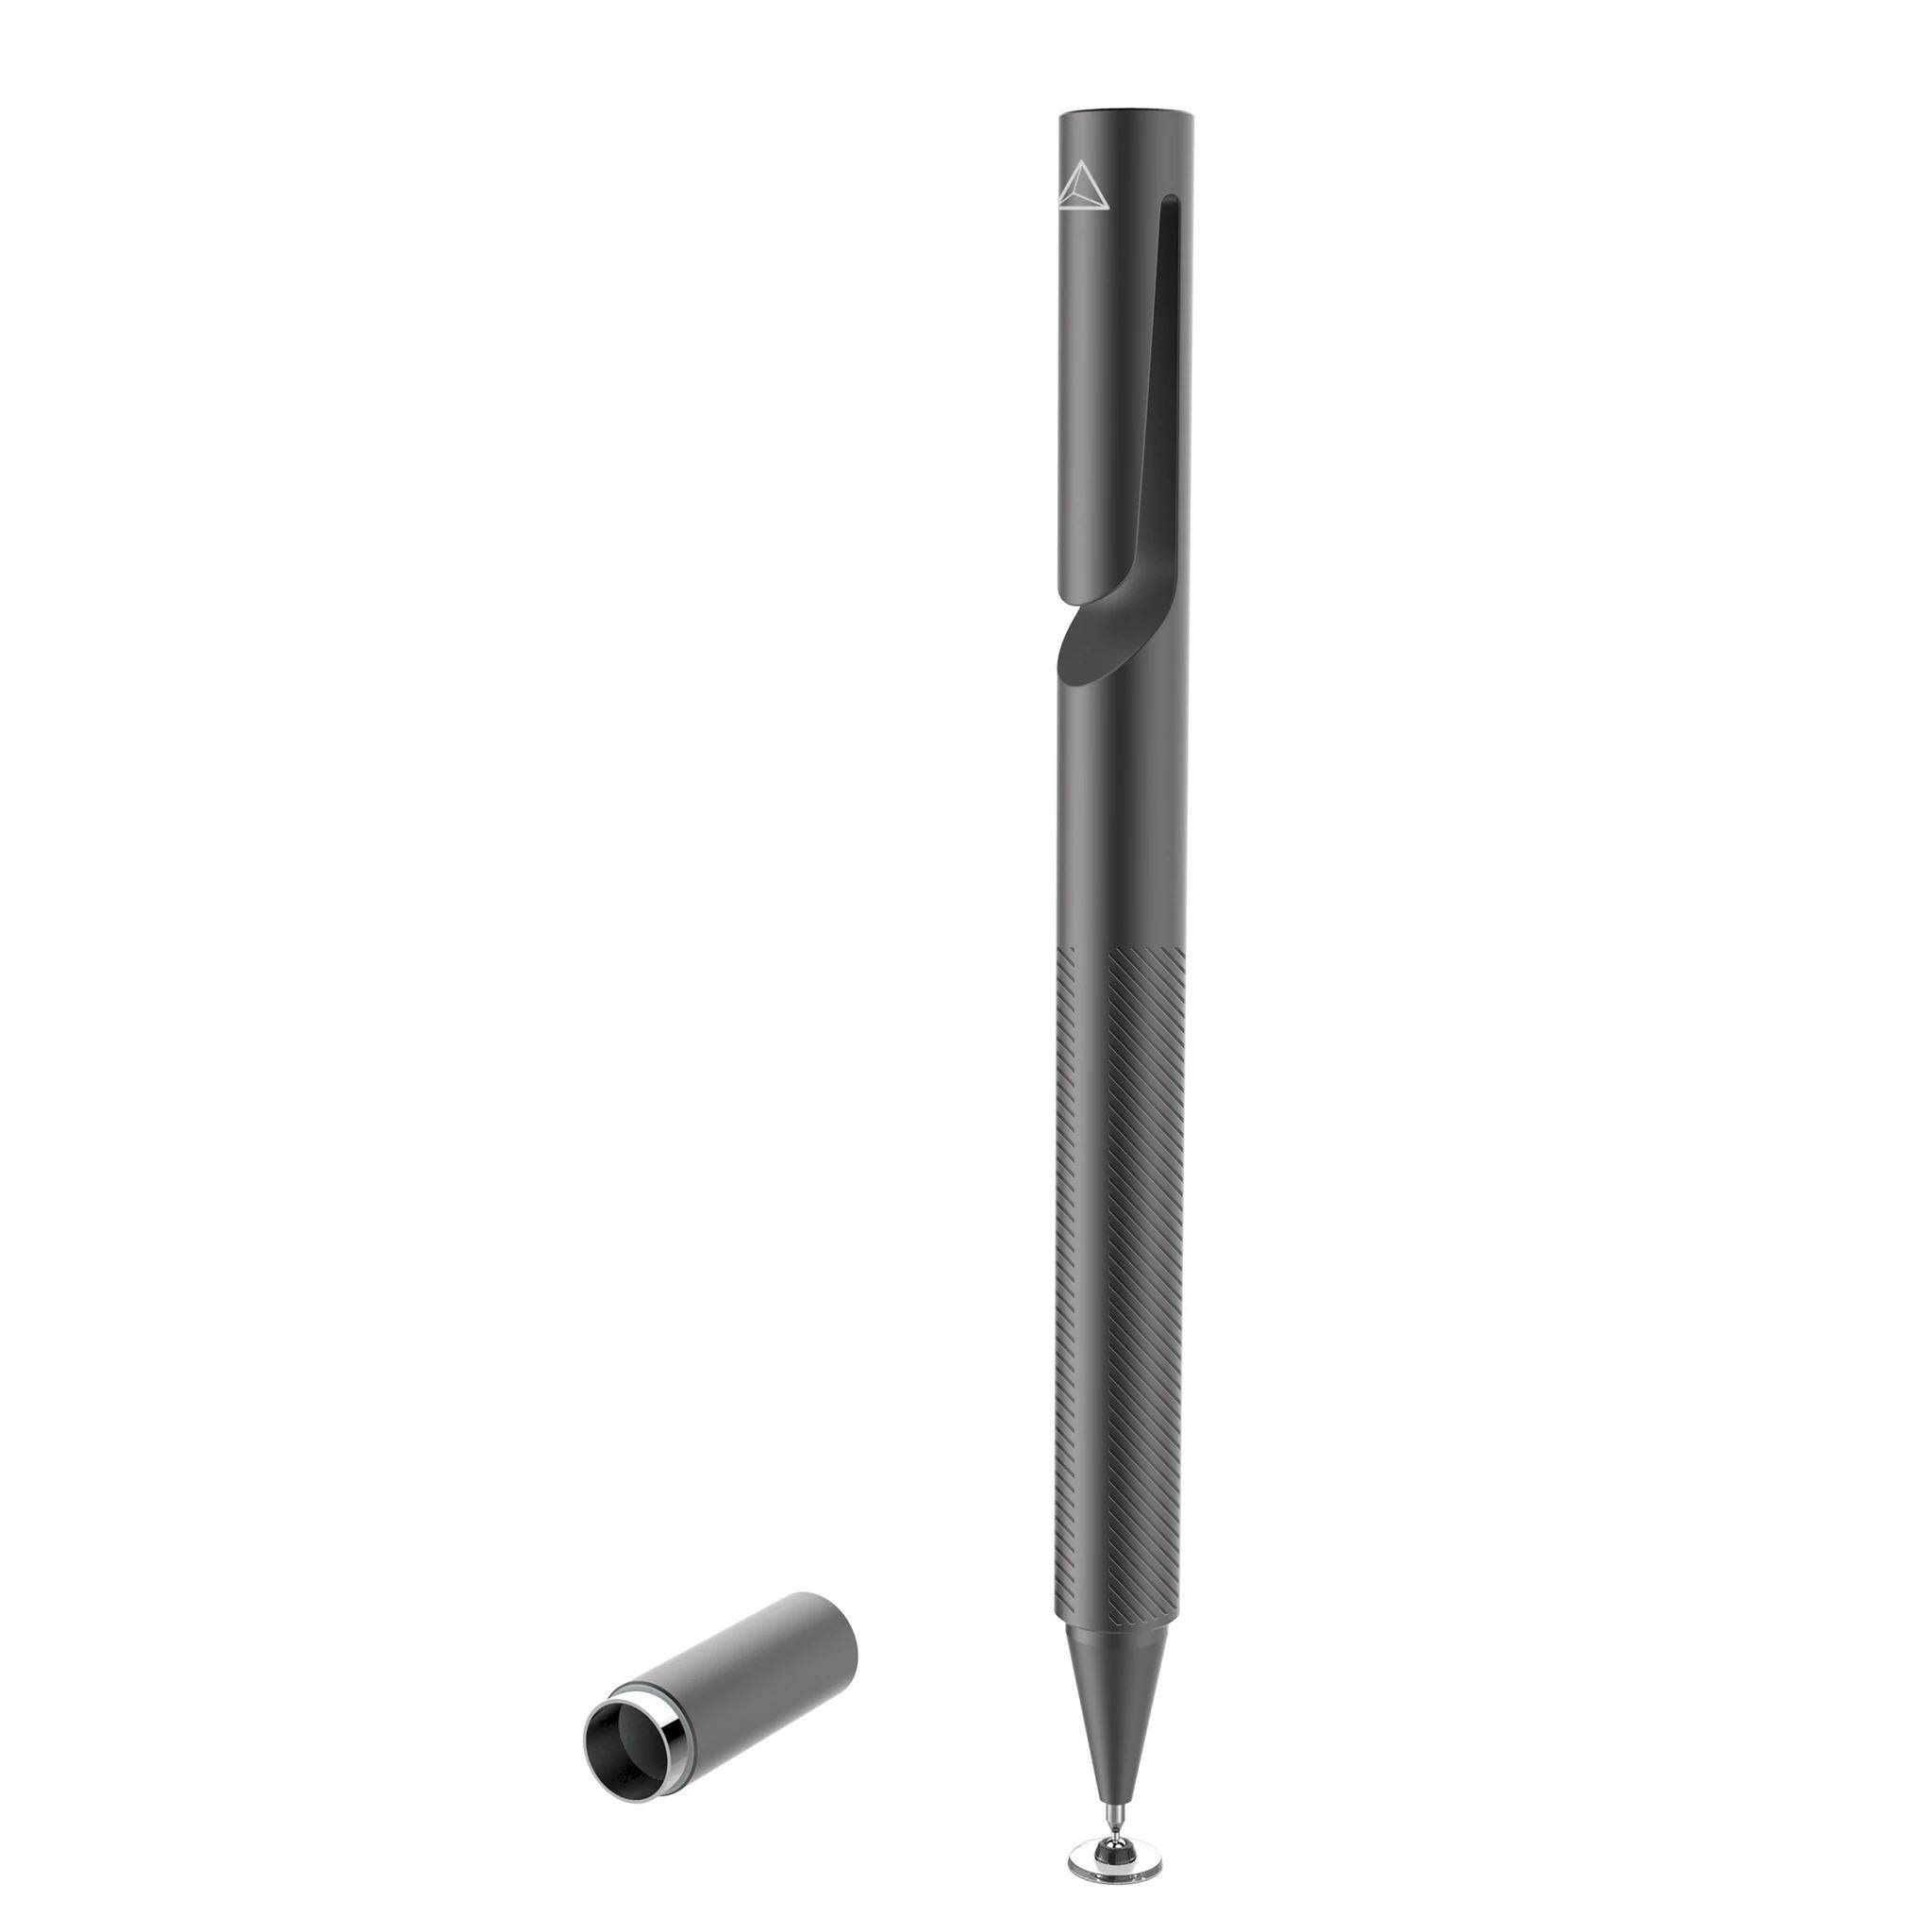 Adonit Jot Pro 3 ปากกา stylus สำหรับสมาร์ทโฟนเเท็บเล็ตหน้าจอ touch screen ทุกรุ่น